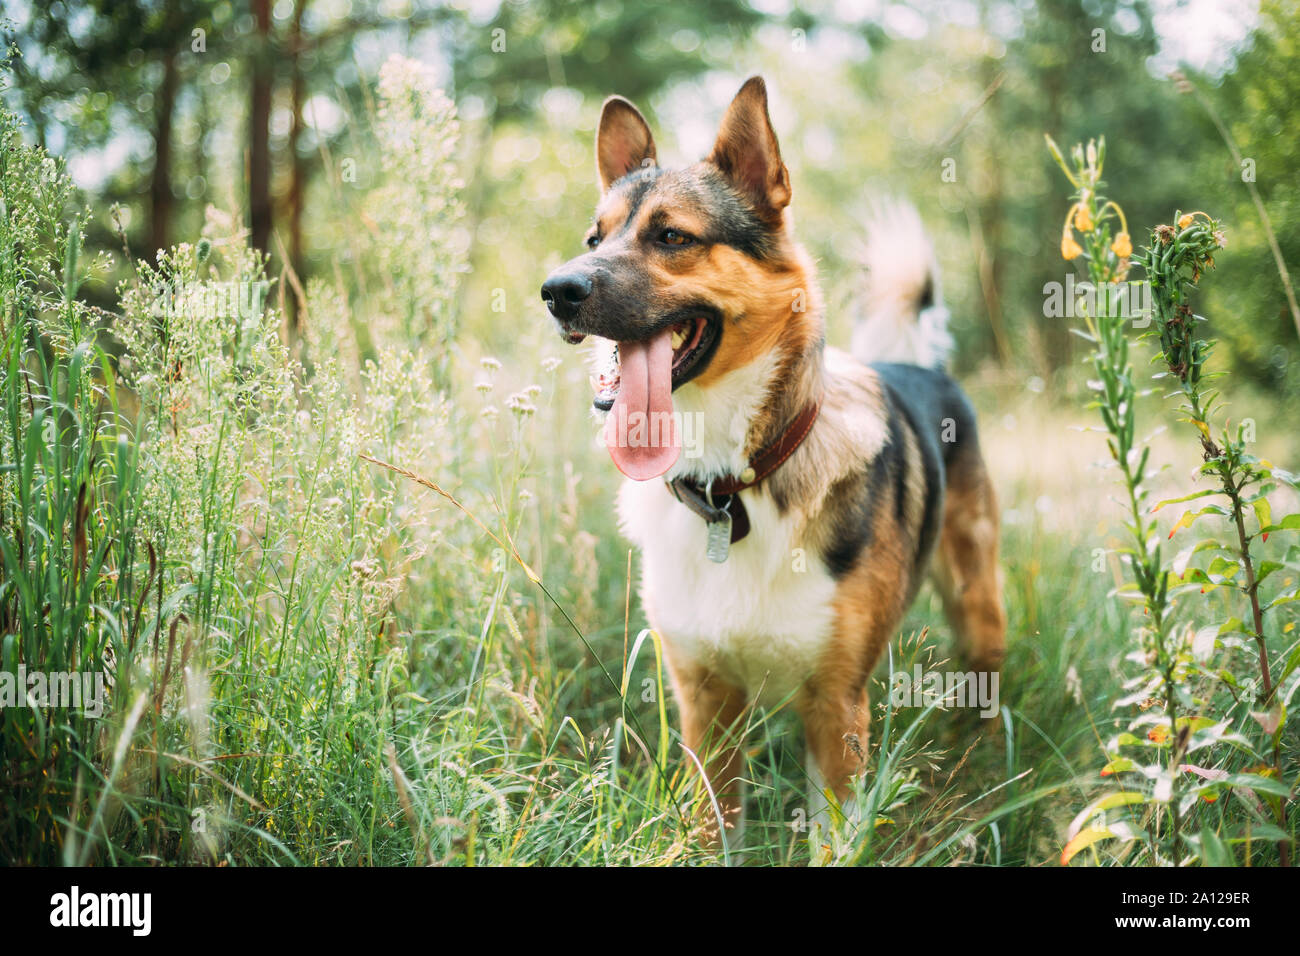 Funny Dog Walking in Green Grass. Gentil animal. Banque D'Images